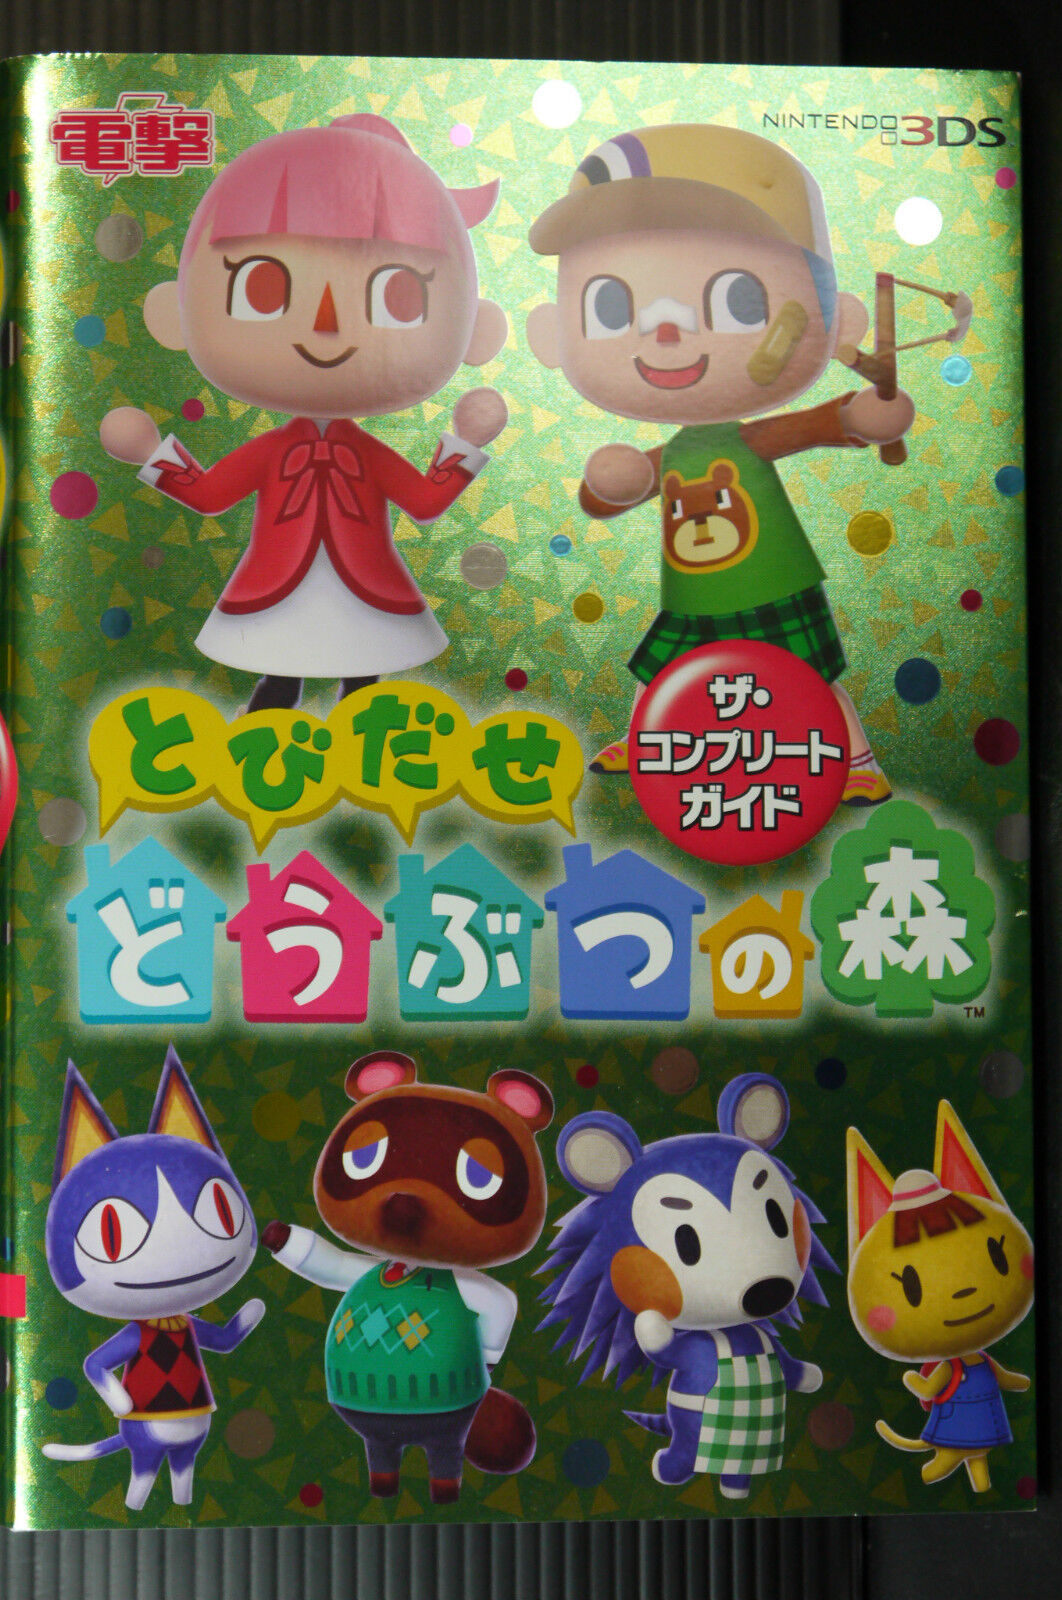 Animal Crossing: New Leaf - Tobidase Doubutsu no Mori Complete Guide - Japan